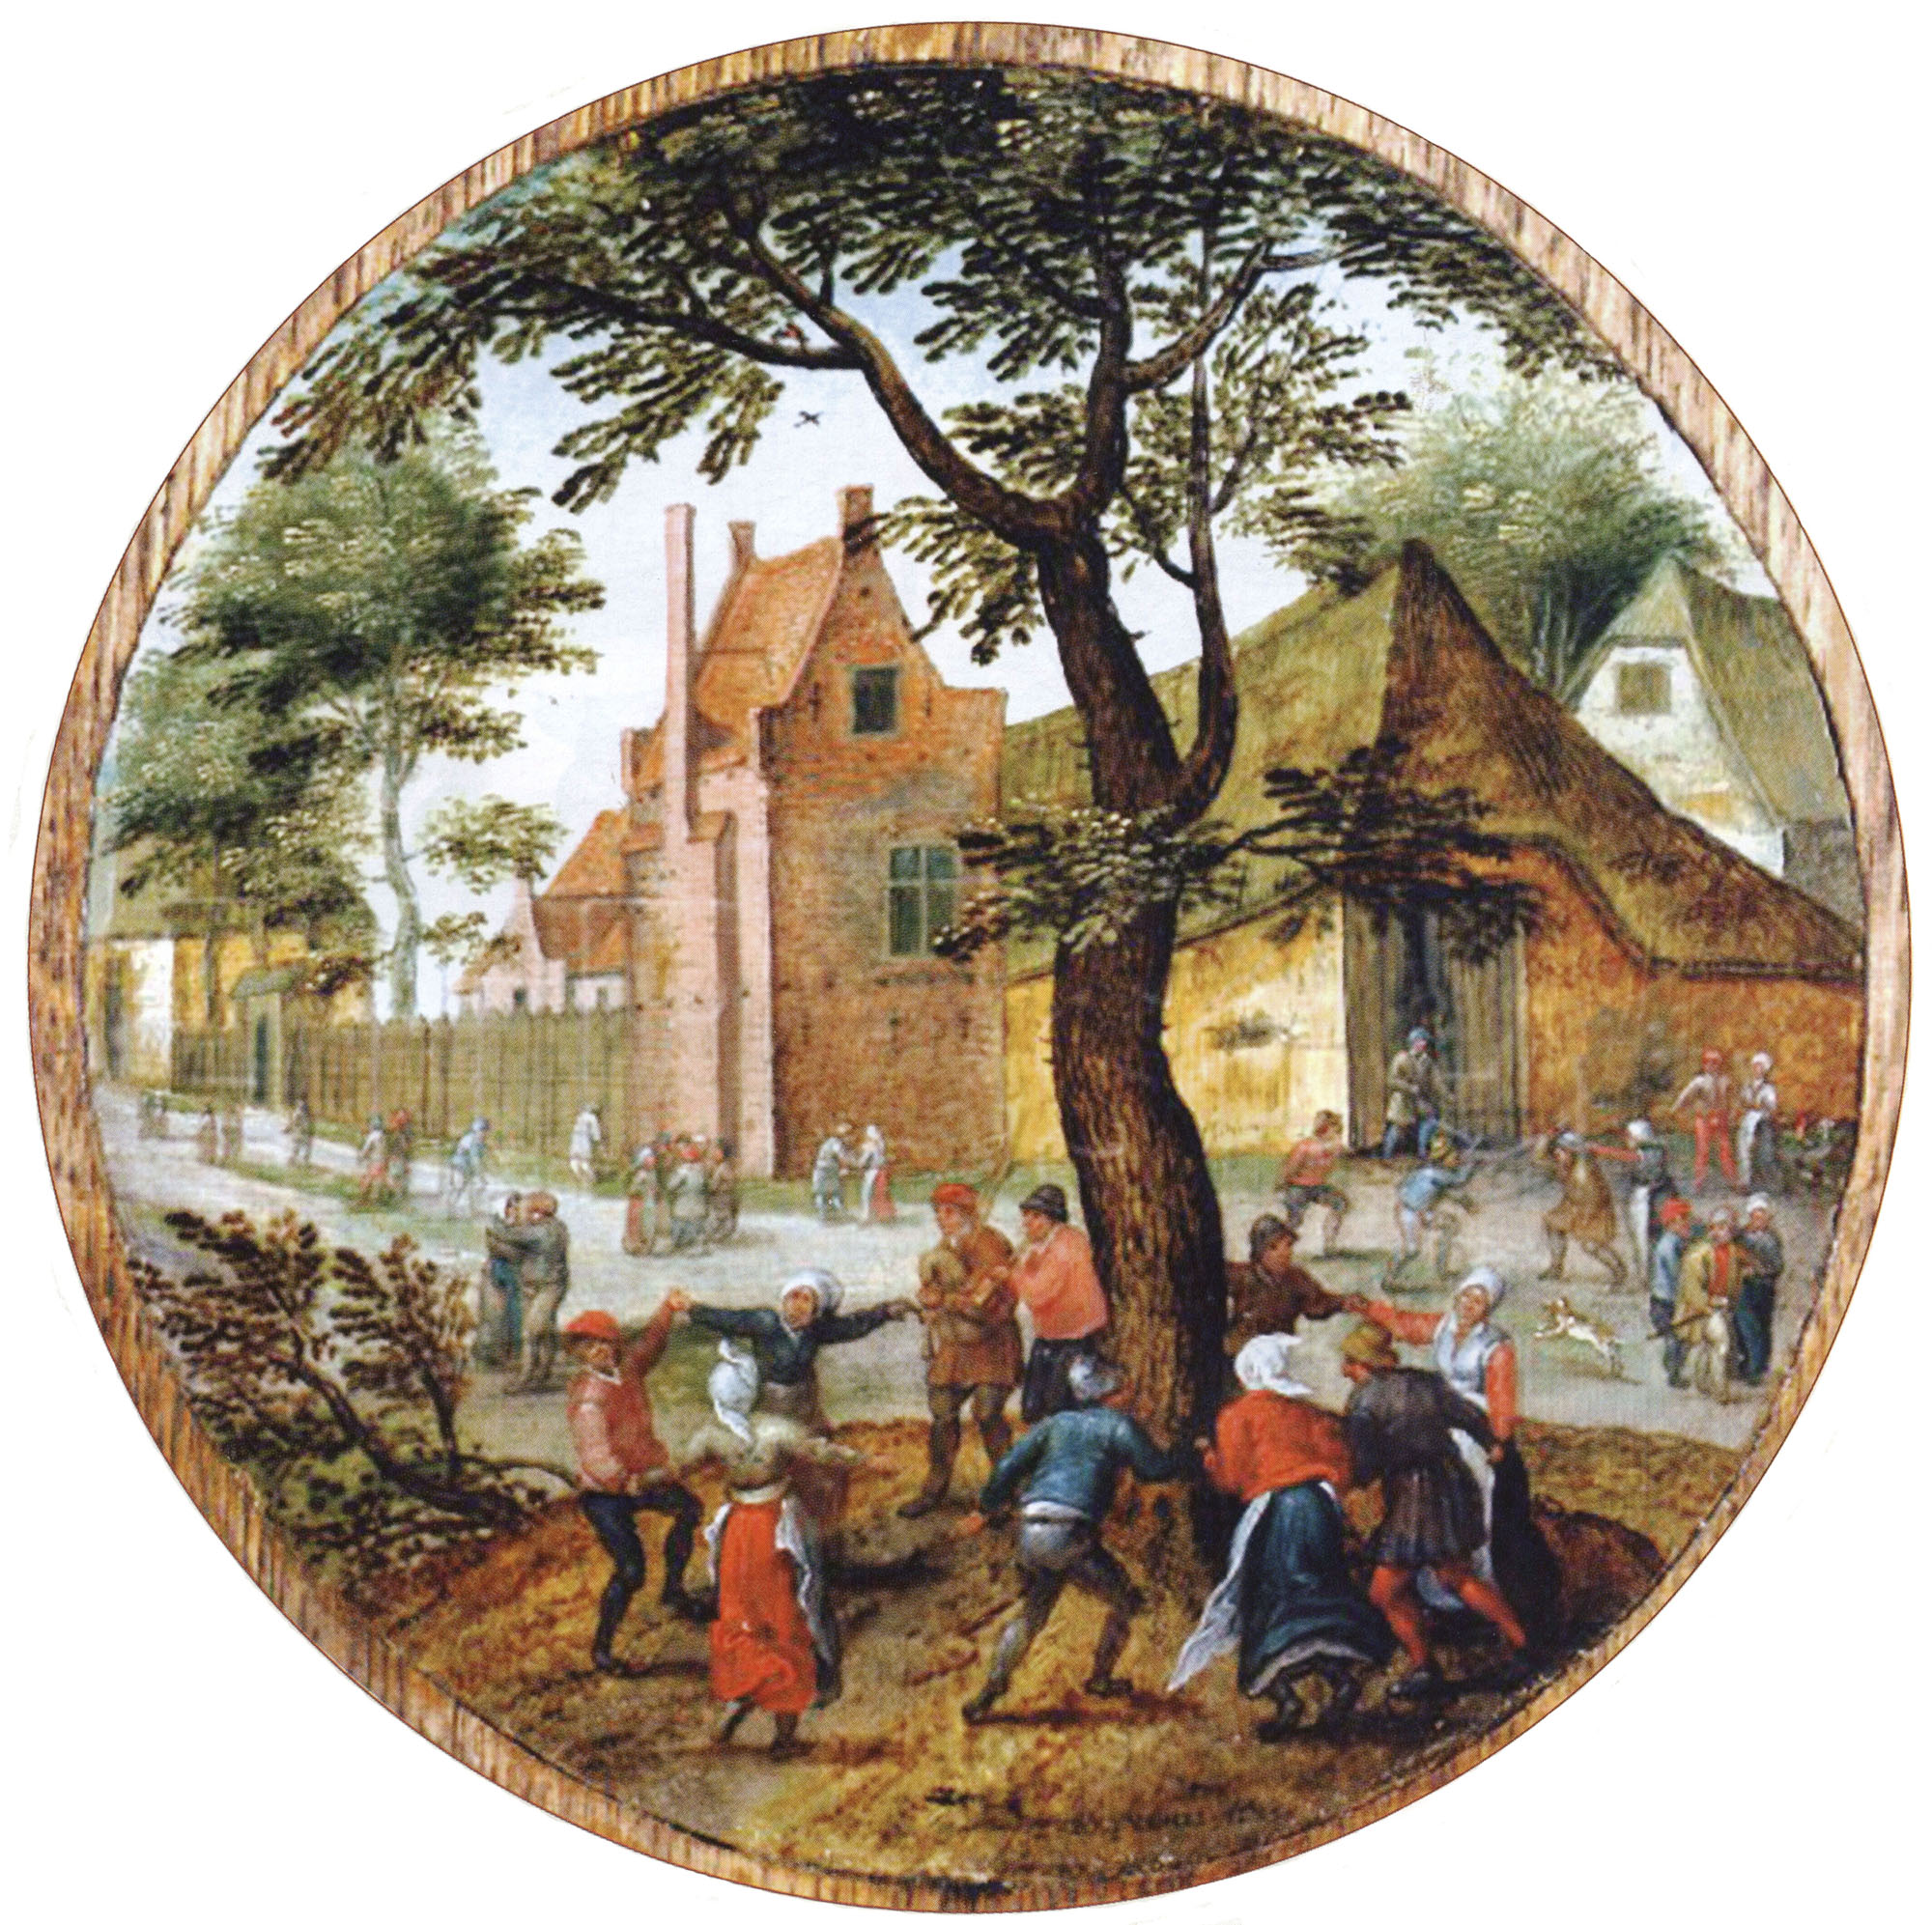 Хендрик ван Аверкамп. Праздник в деревне. Около 1620.